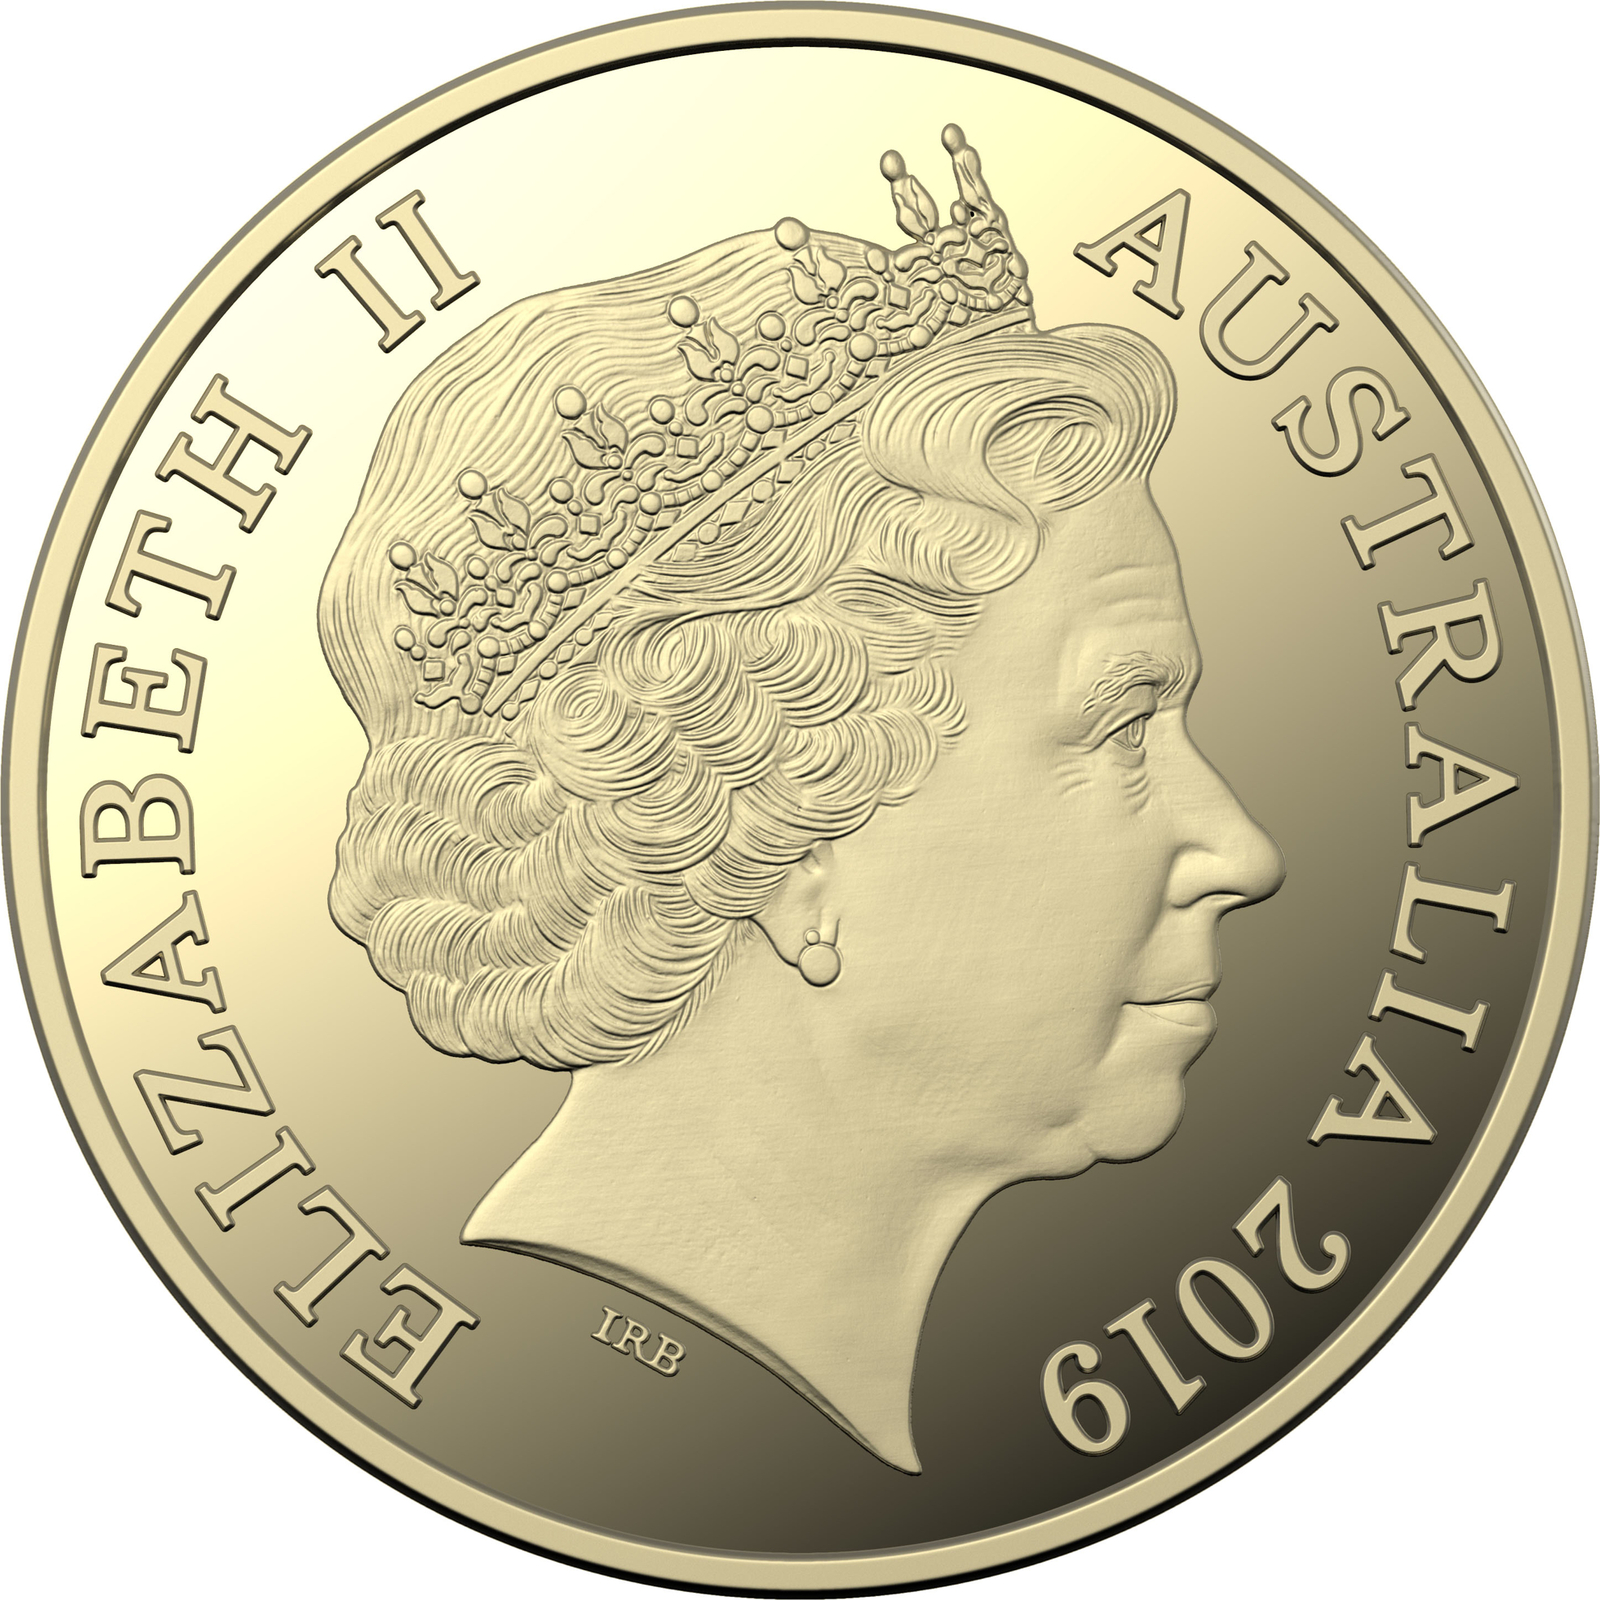 2019 $1 "R" Great Australian Coin Hunt